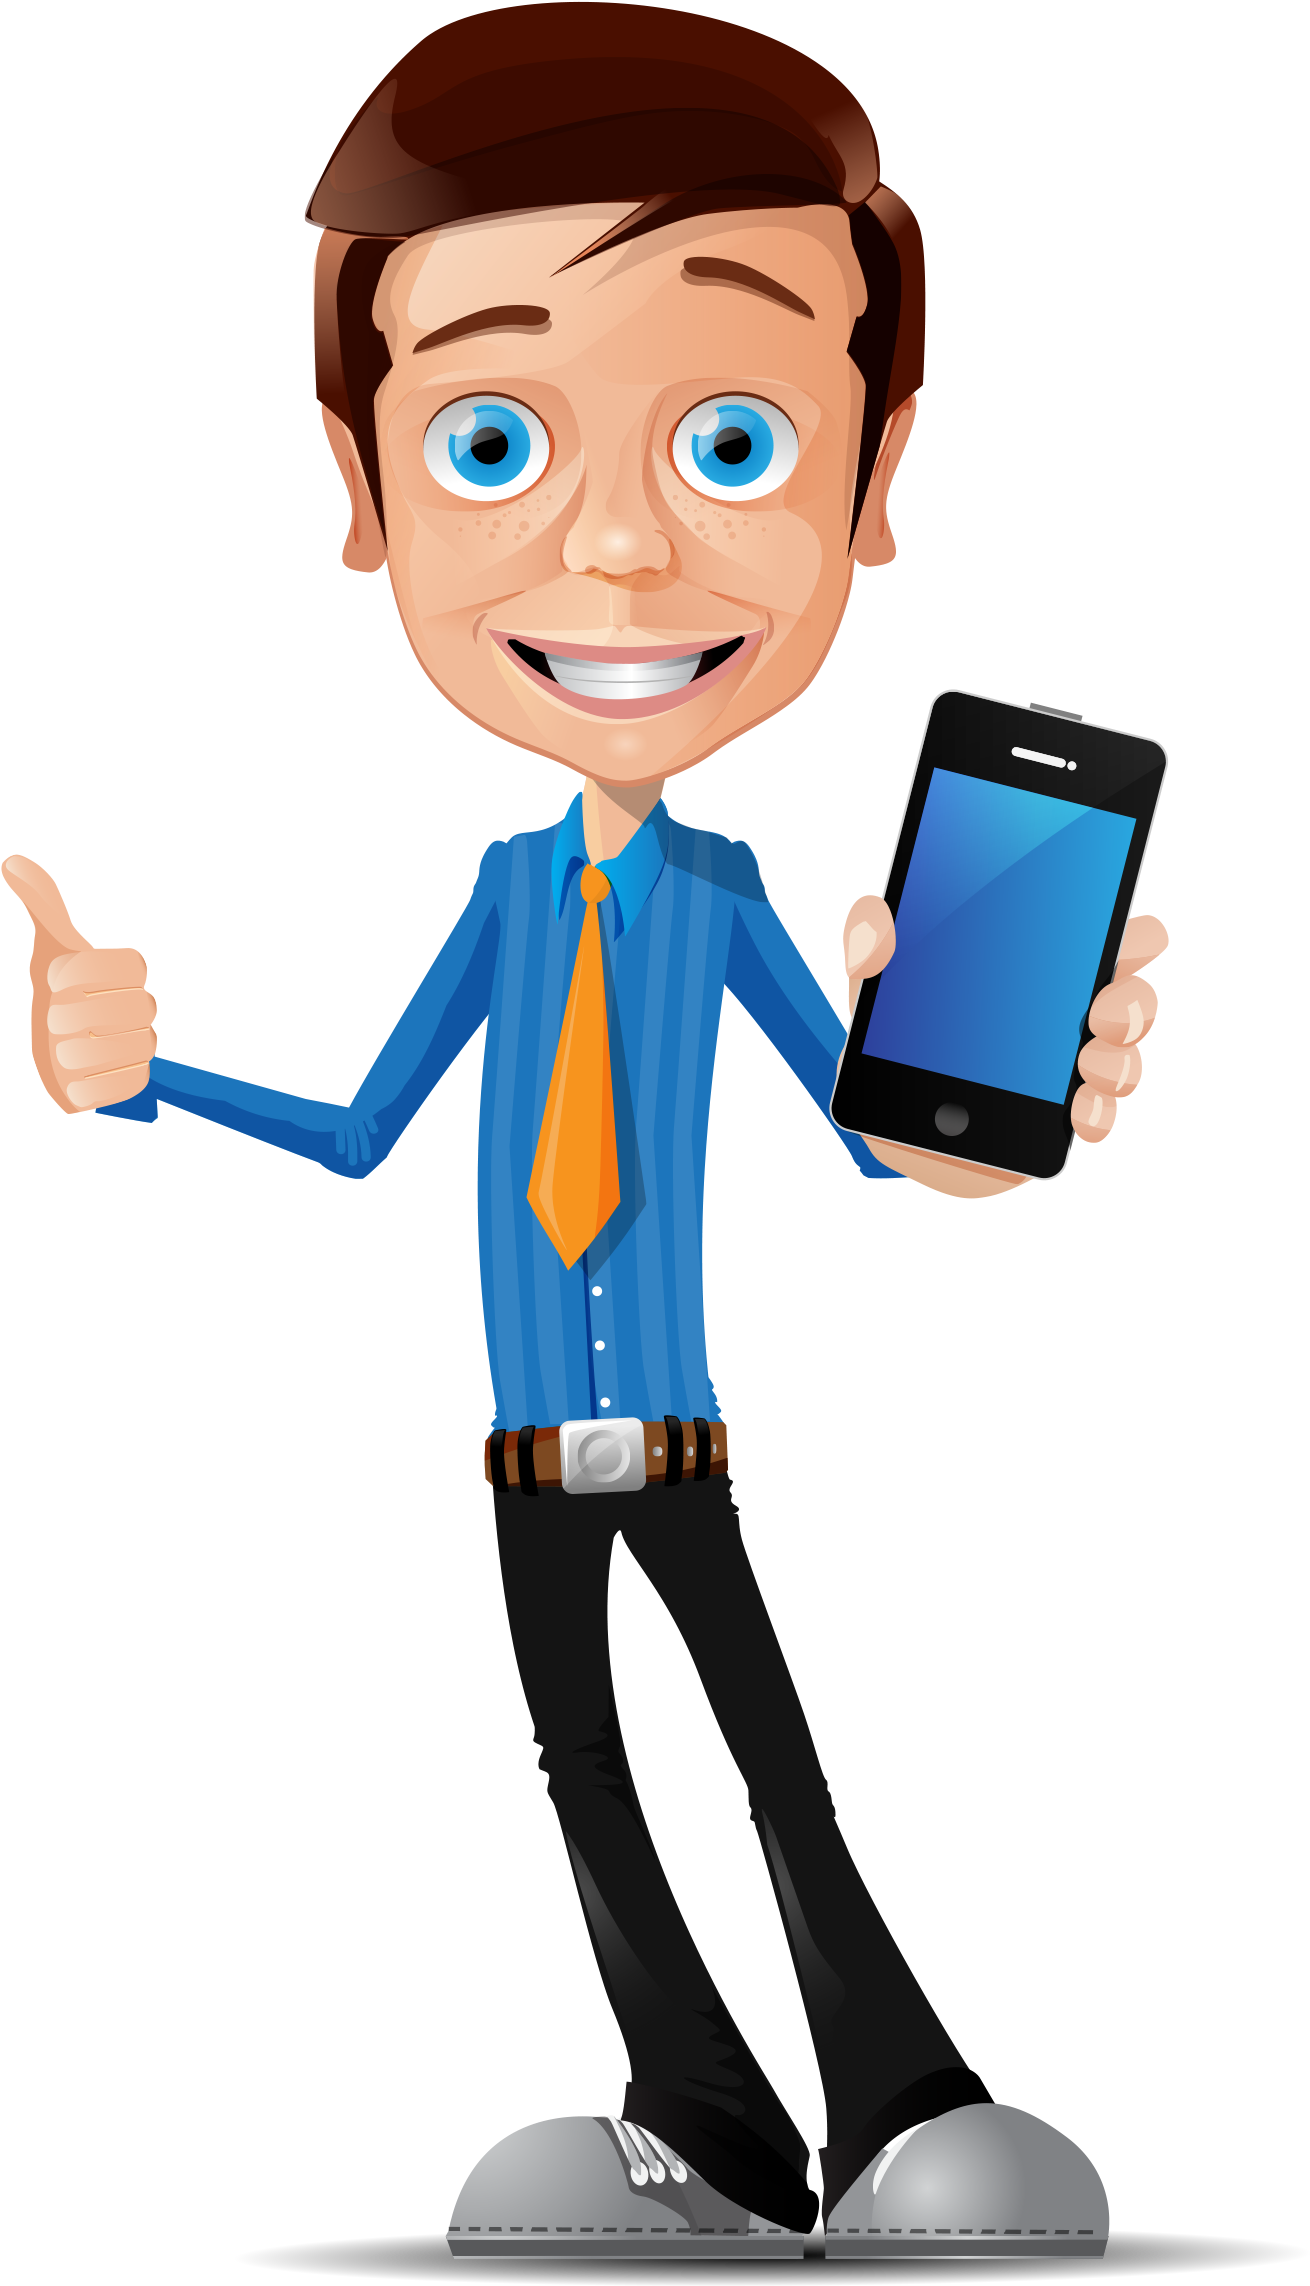 A Cartoon Of A Man Holding A Cell Phone